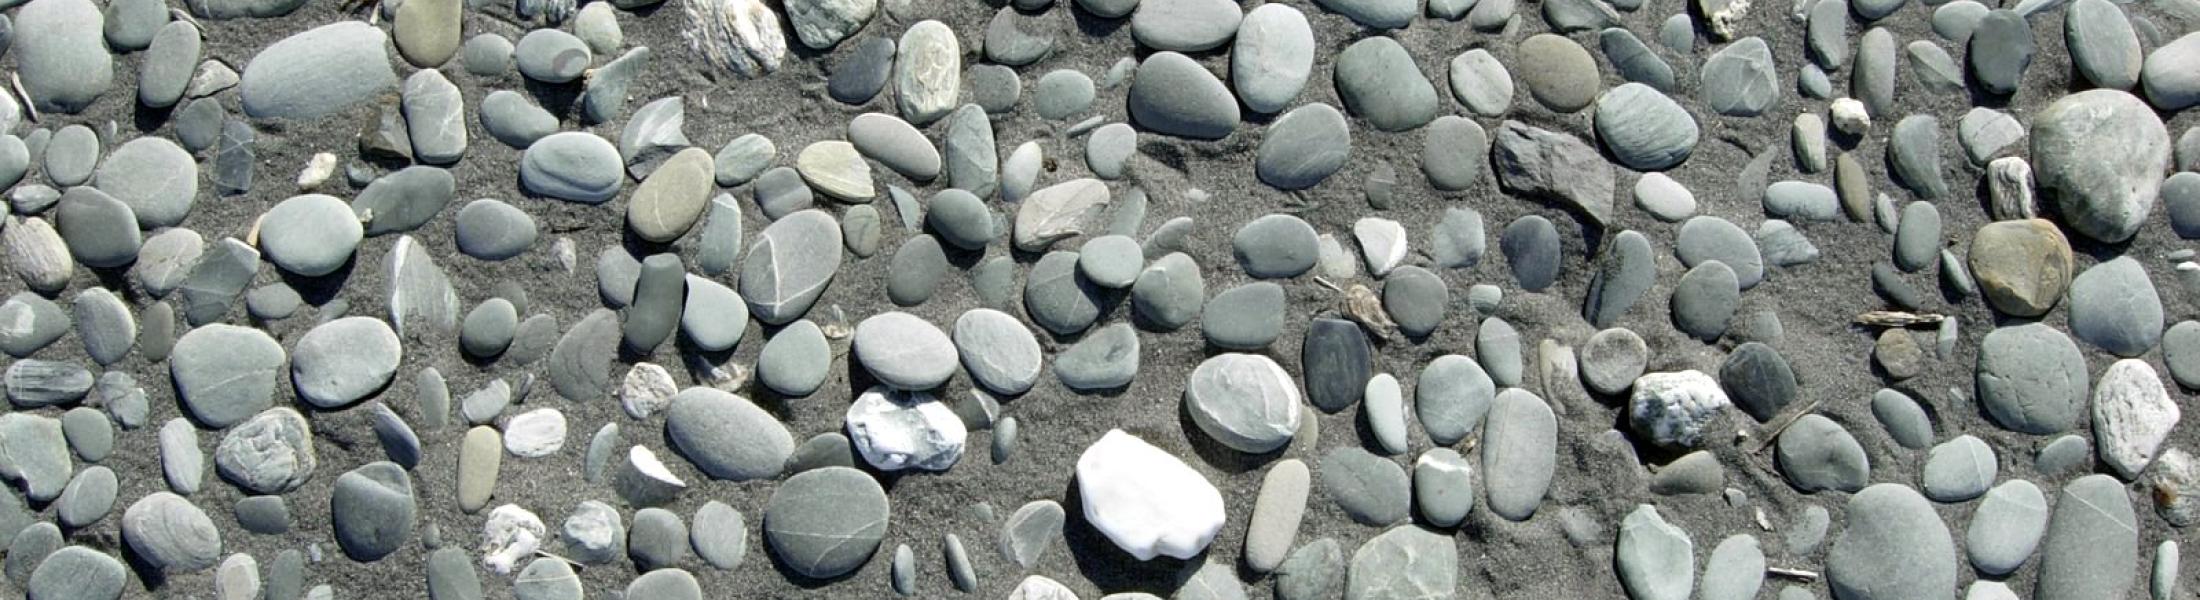 Stones on a New Zealand beach